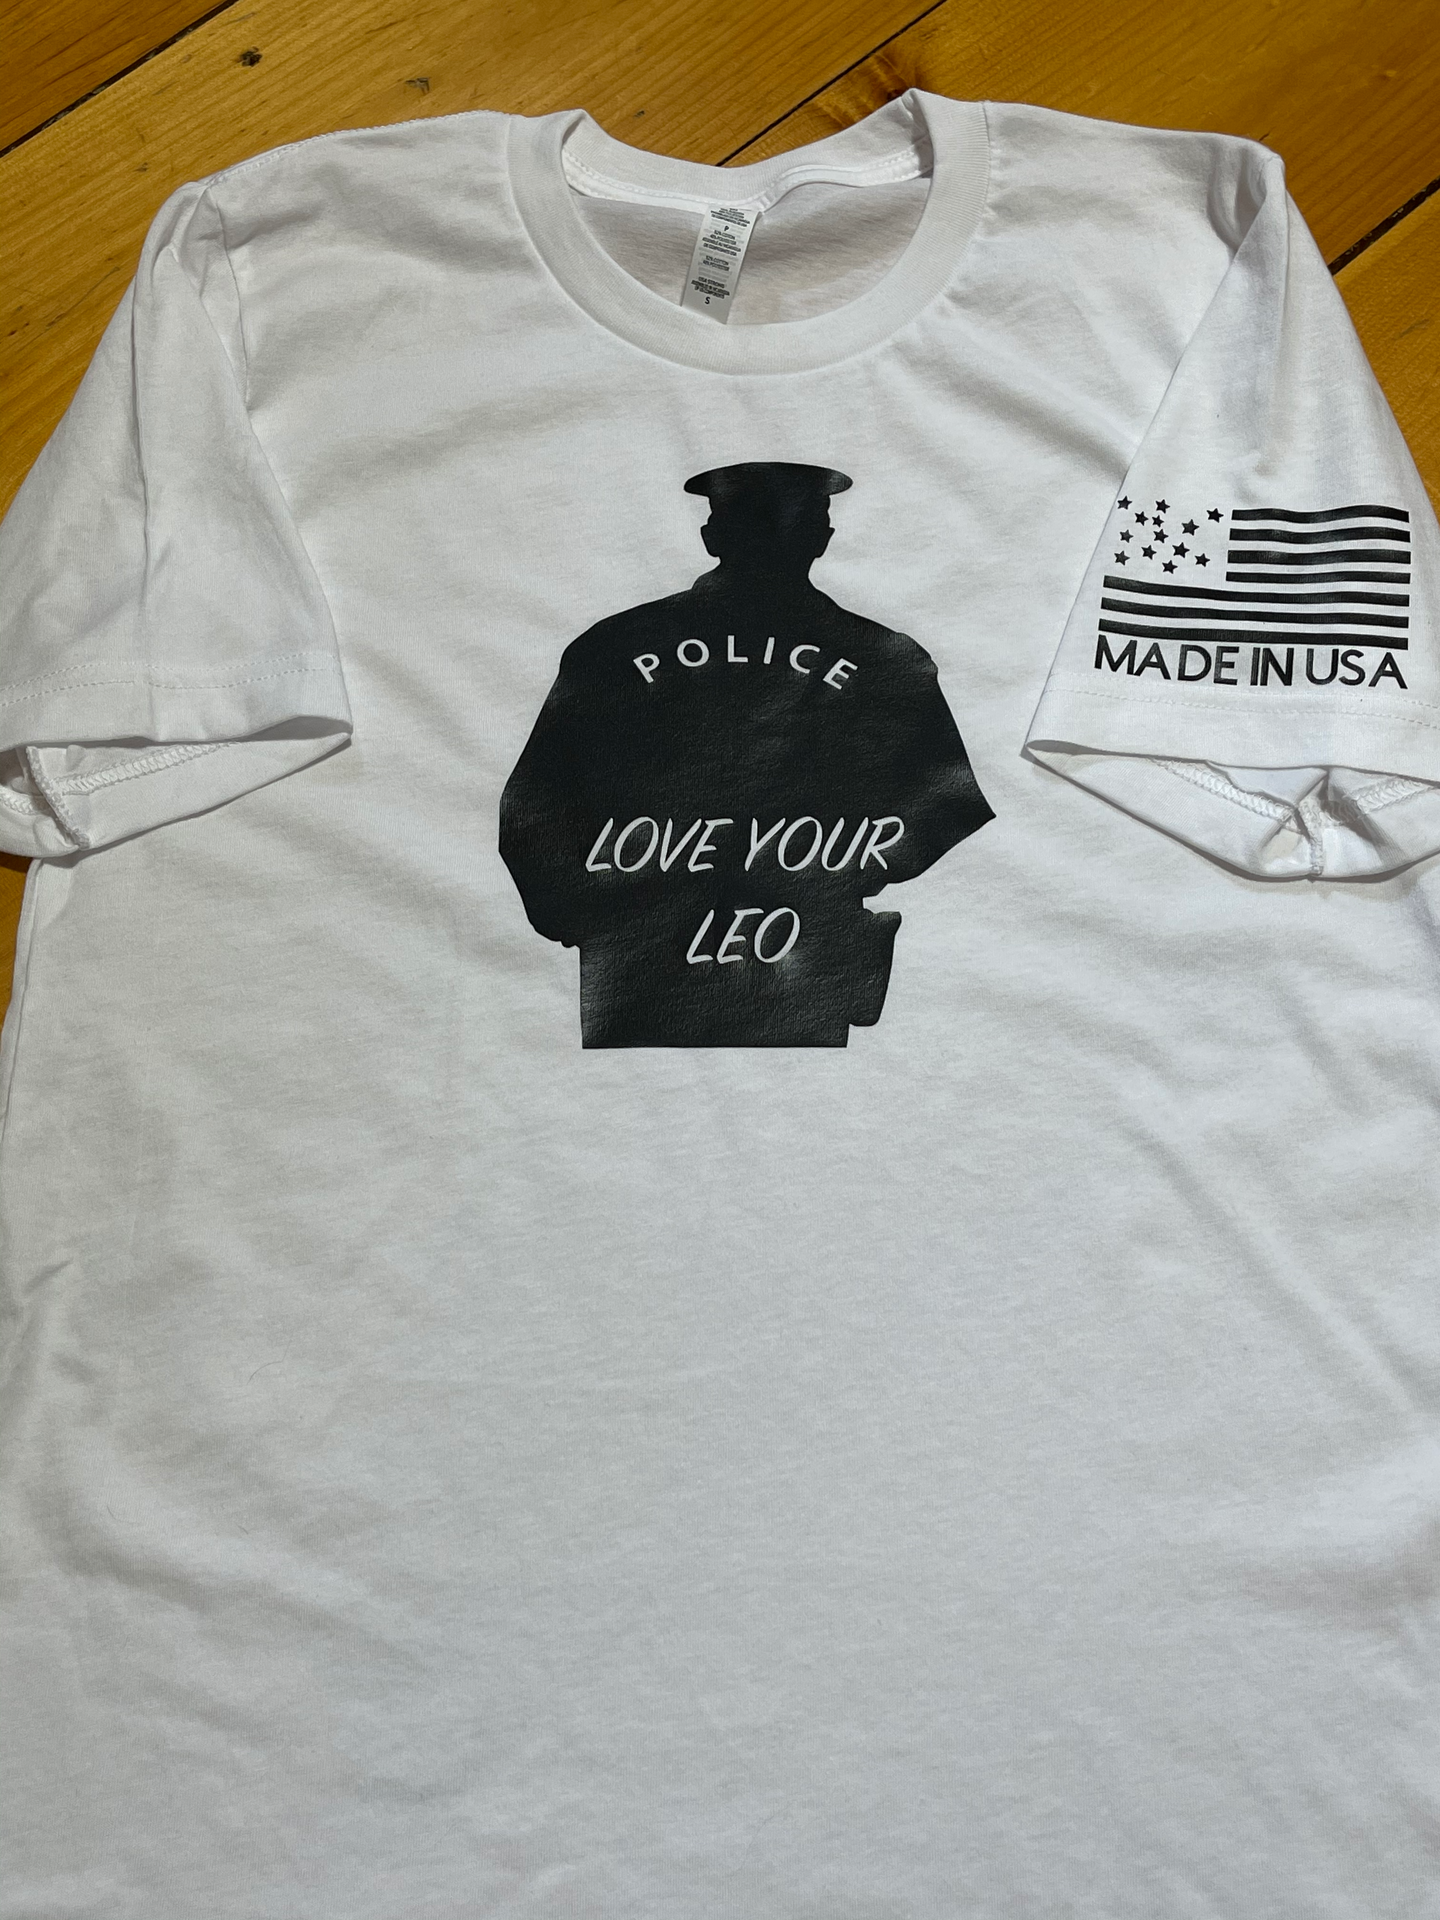 Love Your LEO - Non-Profit Tshirt